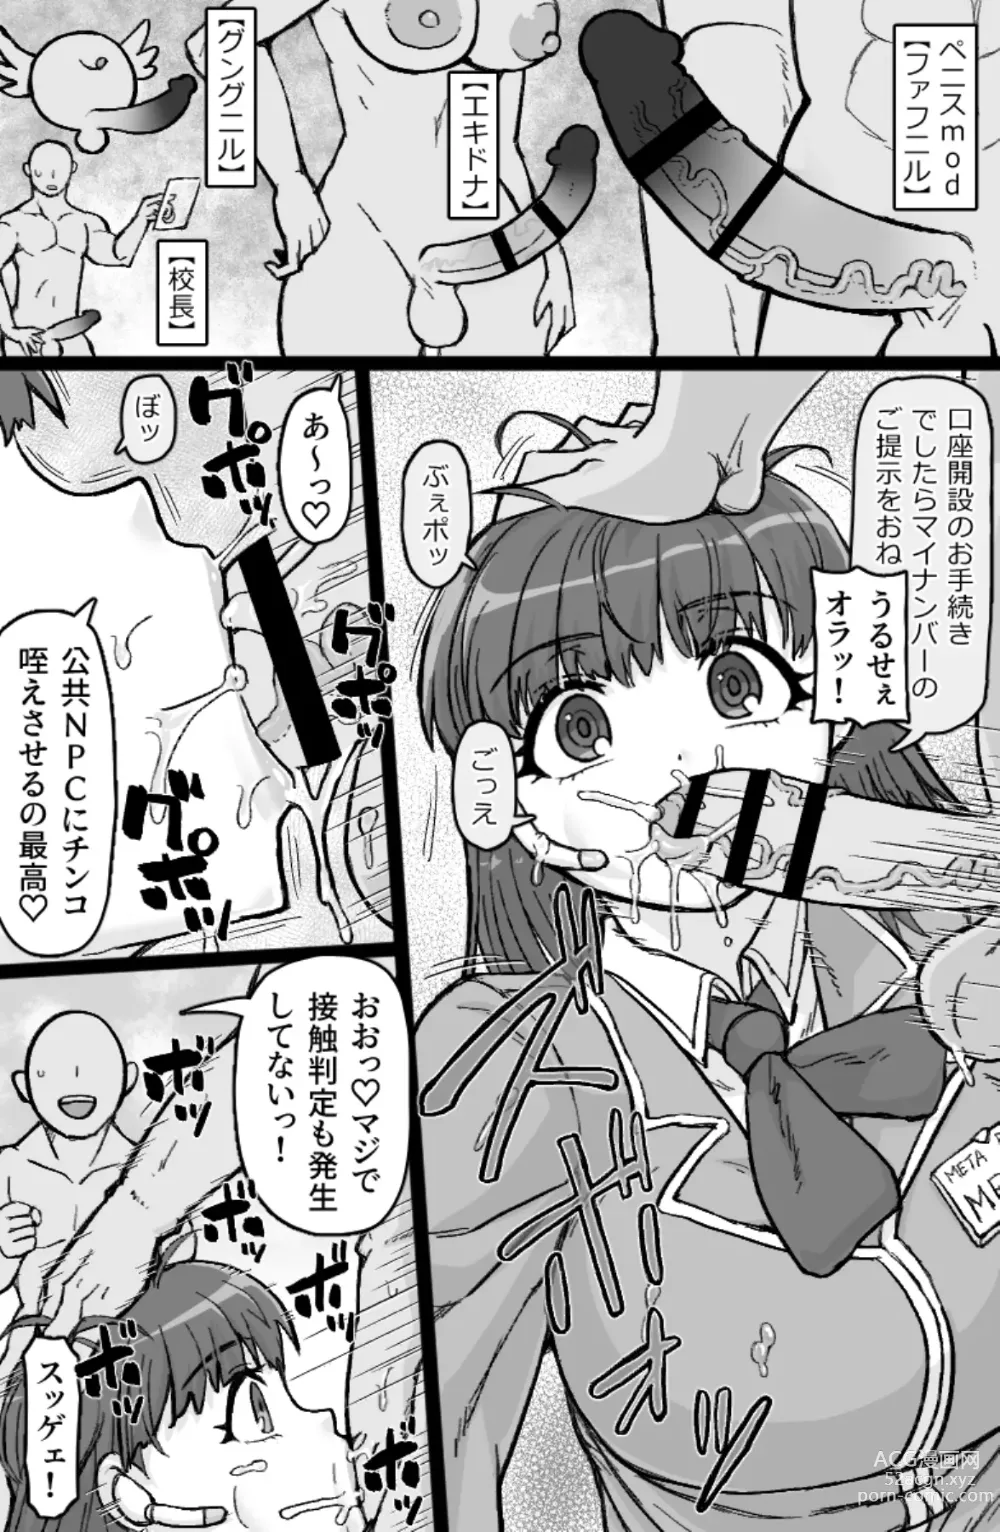 Page 6 of doujinshi Hataraku! NPCFxxk